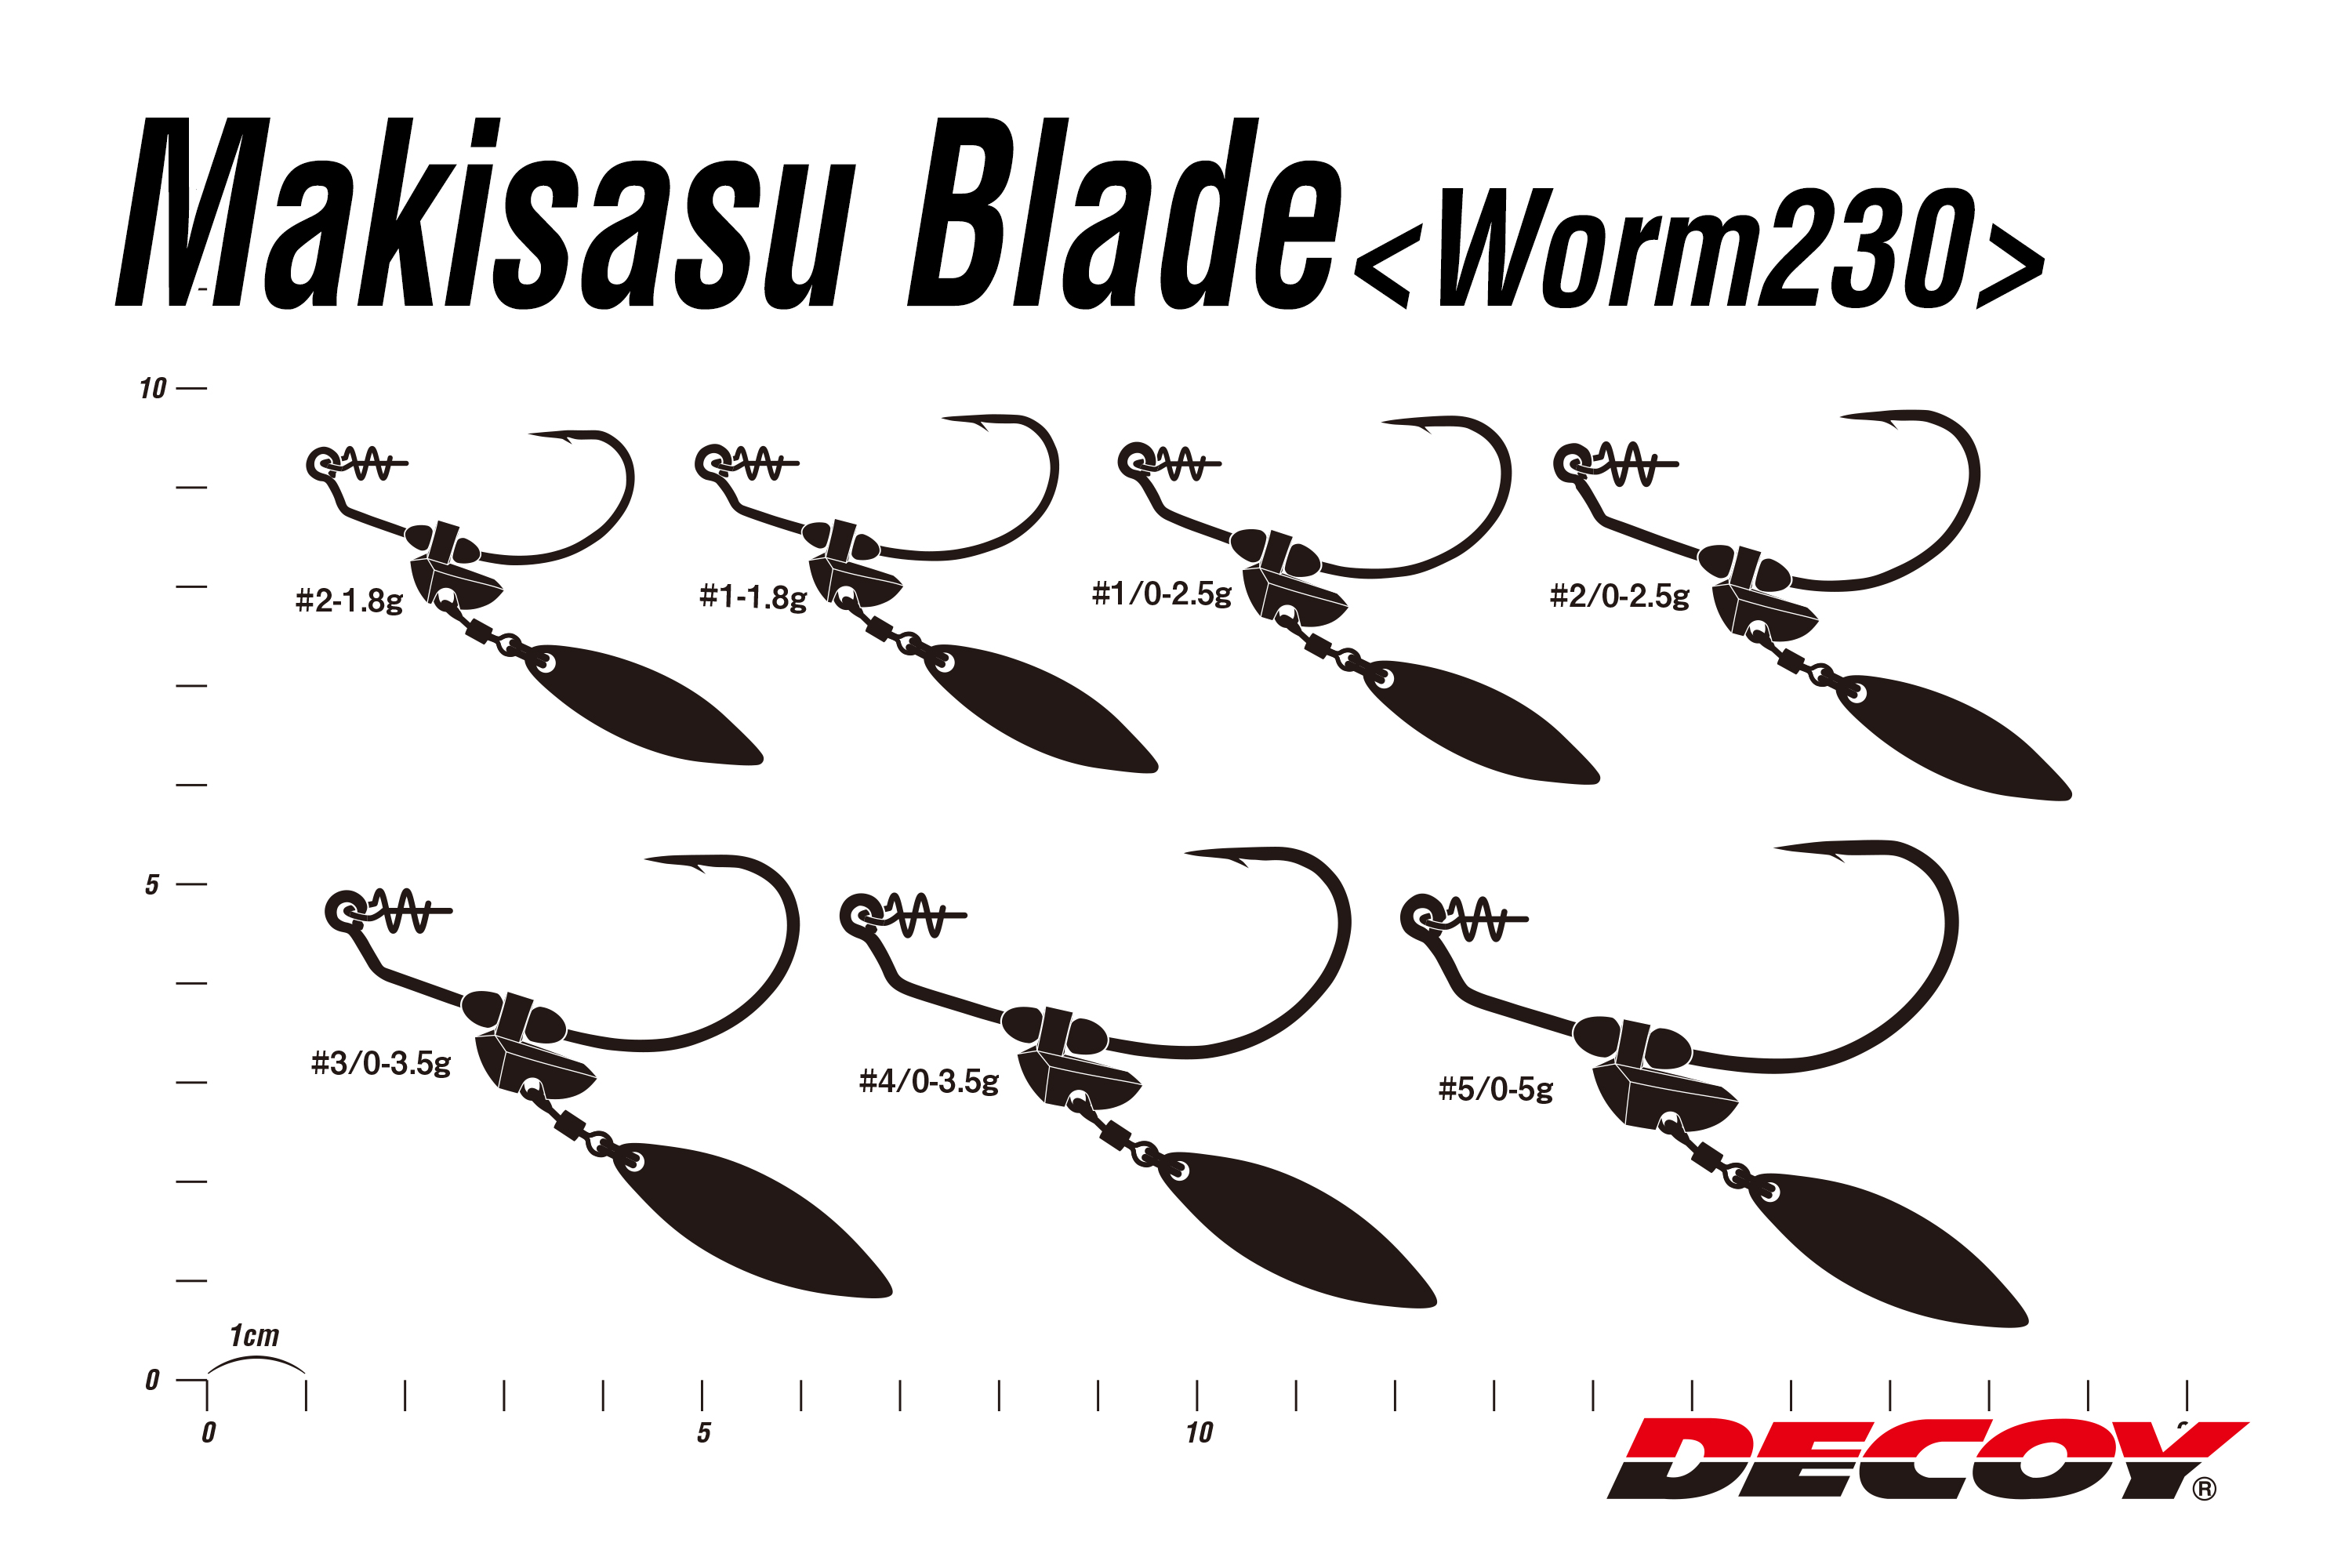 Ami-spring-wide-gap-worm-hook-swimbait-decoy-worm-230-makisasu-blade-ns-black-lure-fishing-planet-negozio-pesca-online-fishing-shop-pescare-predatori-size-chart.